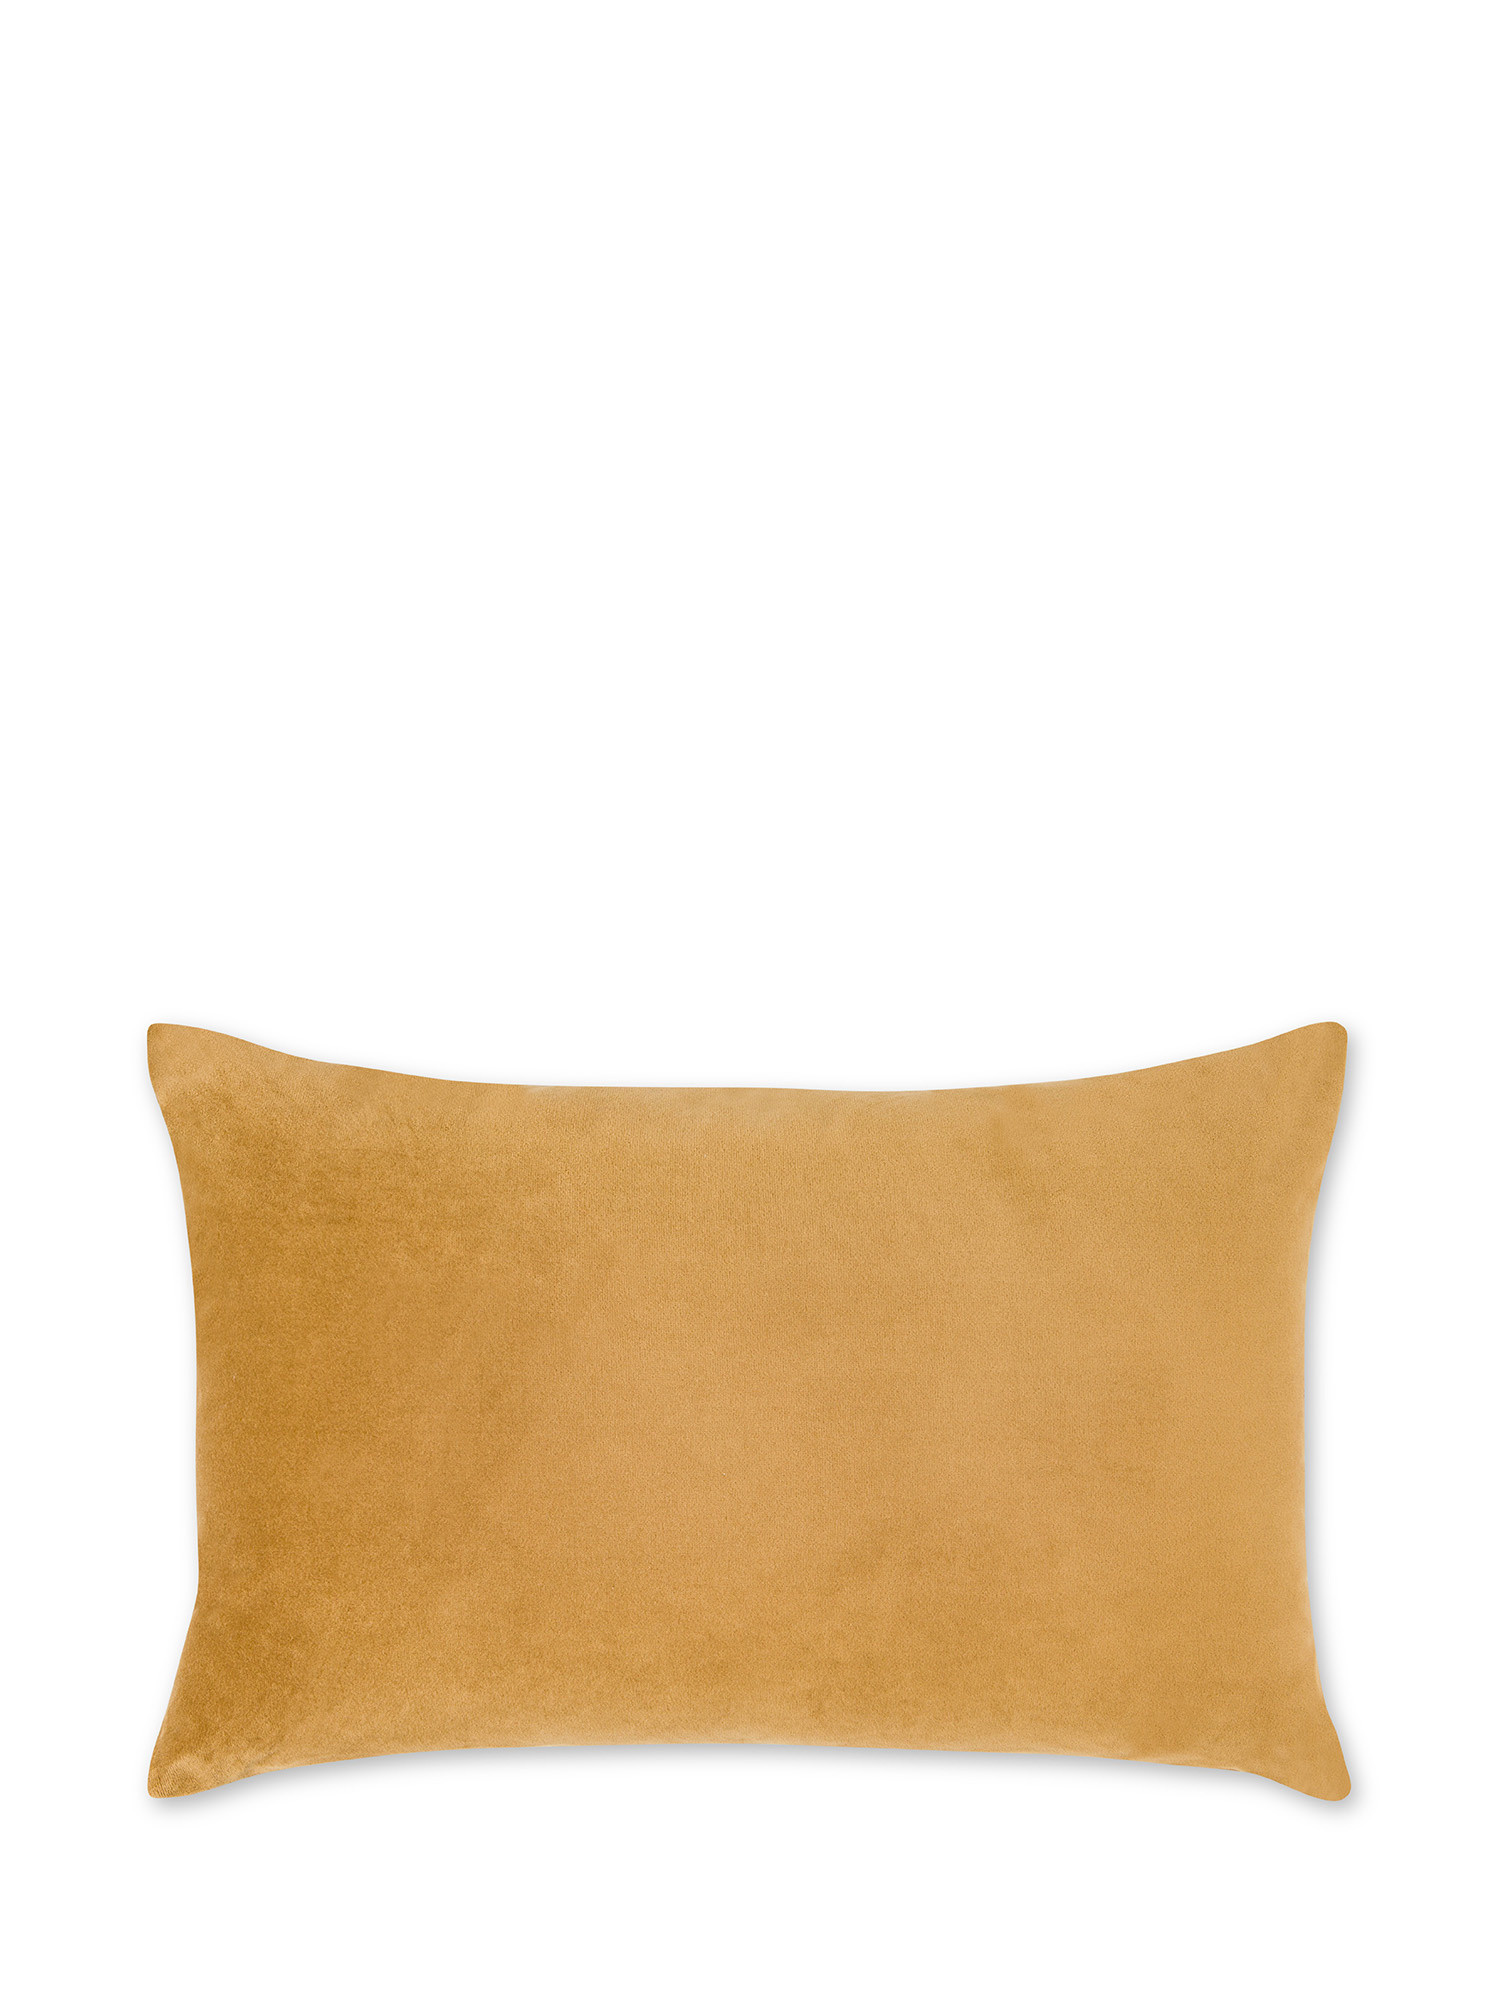 Star print velvet cushion 35x55cm, Dark Yellow, large image number 1